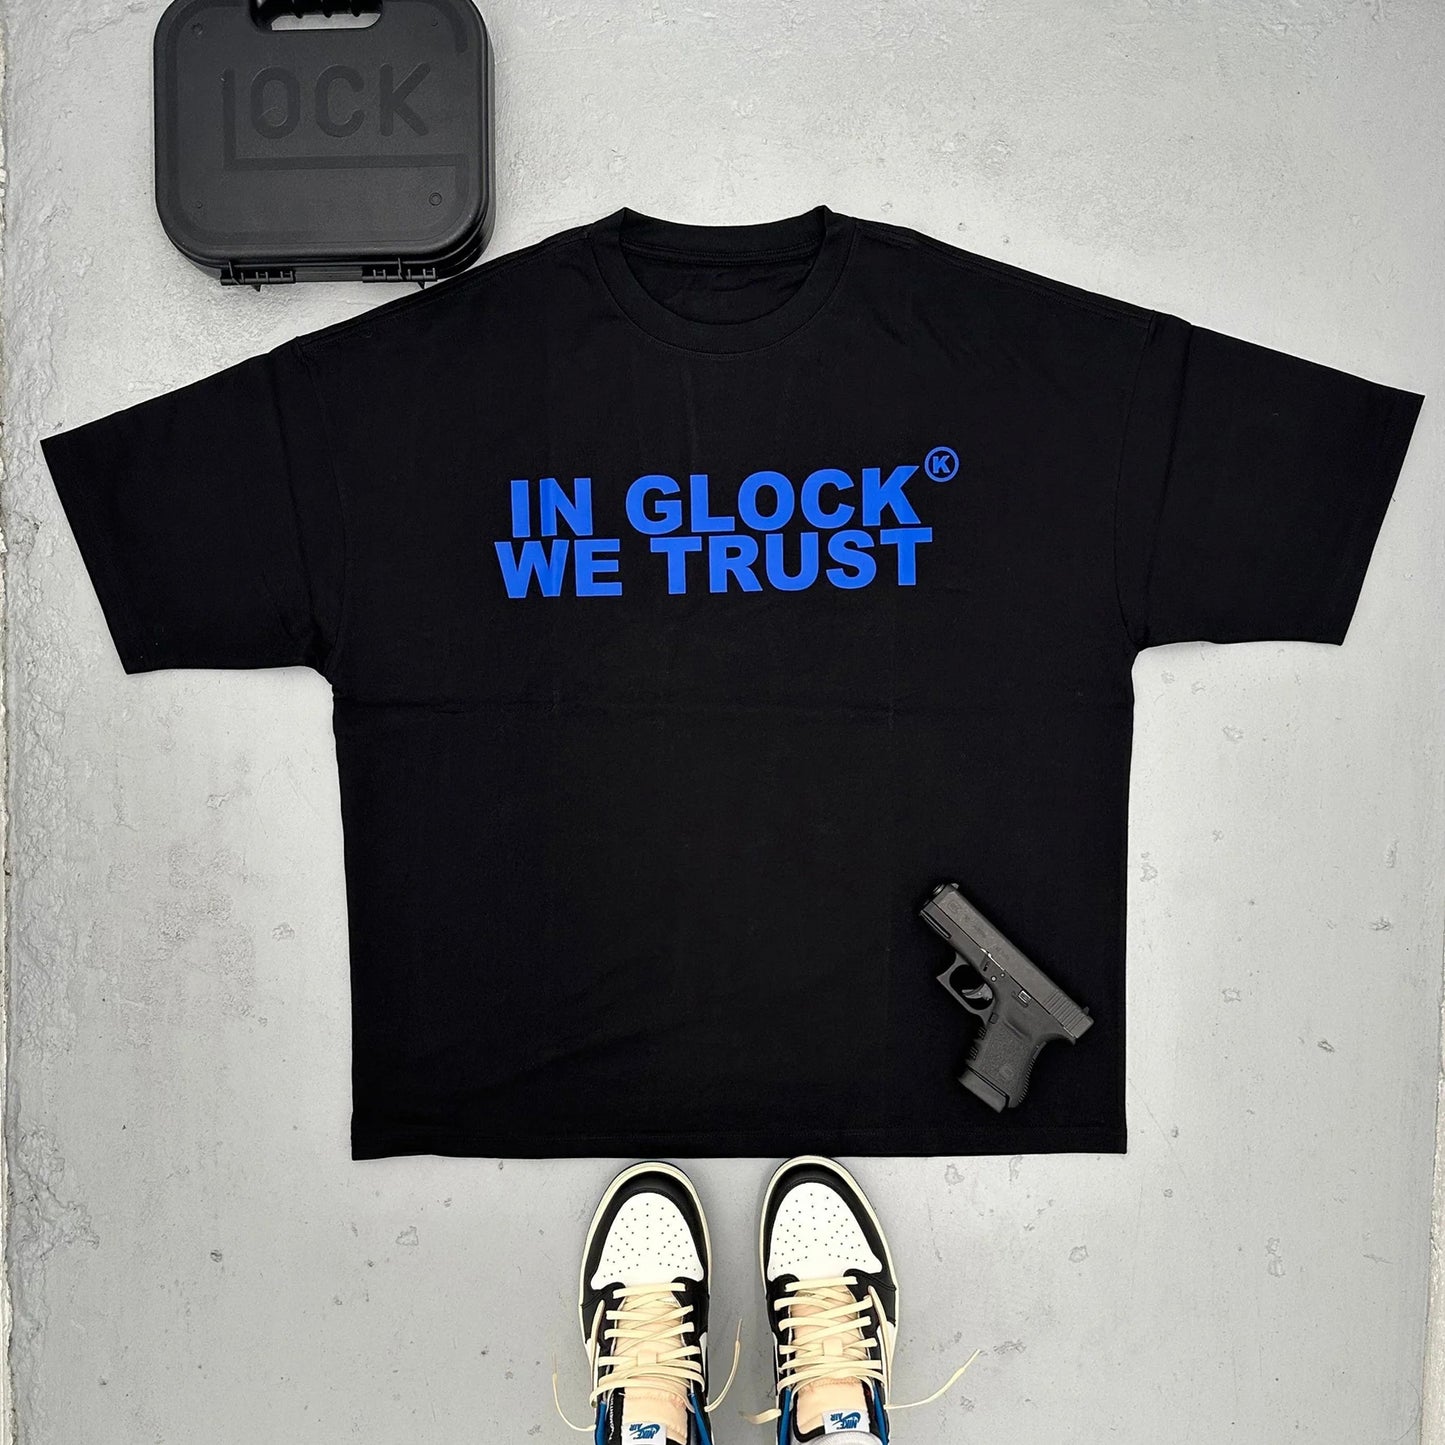 In Glock We Trust printed T-shirt